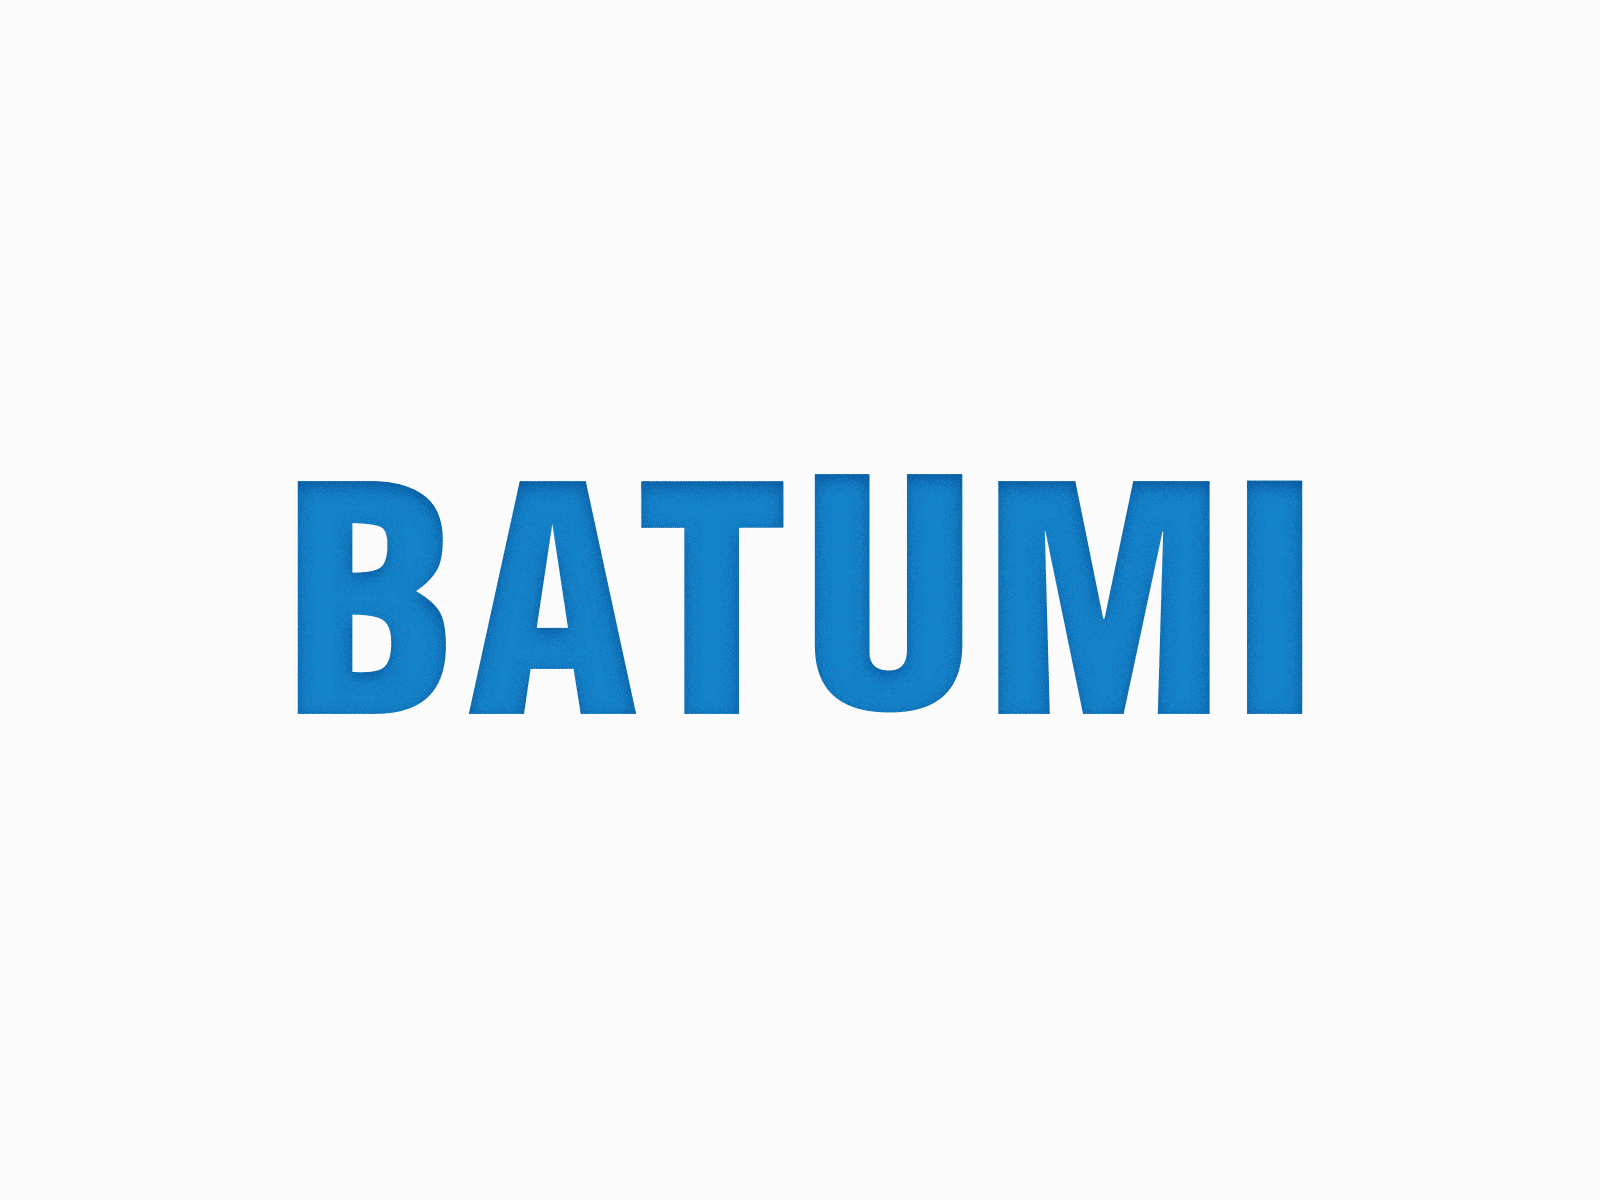 Batumi Logo Animation.